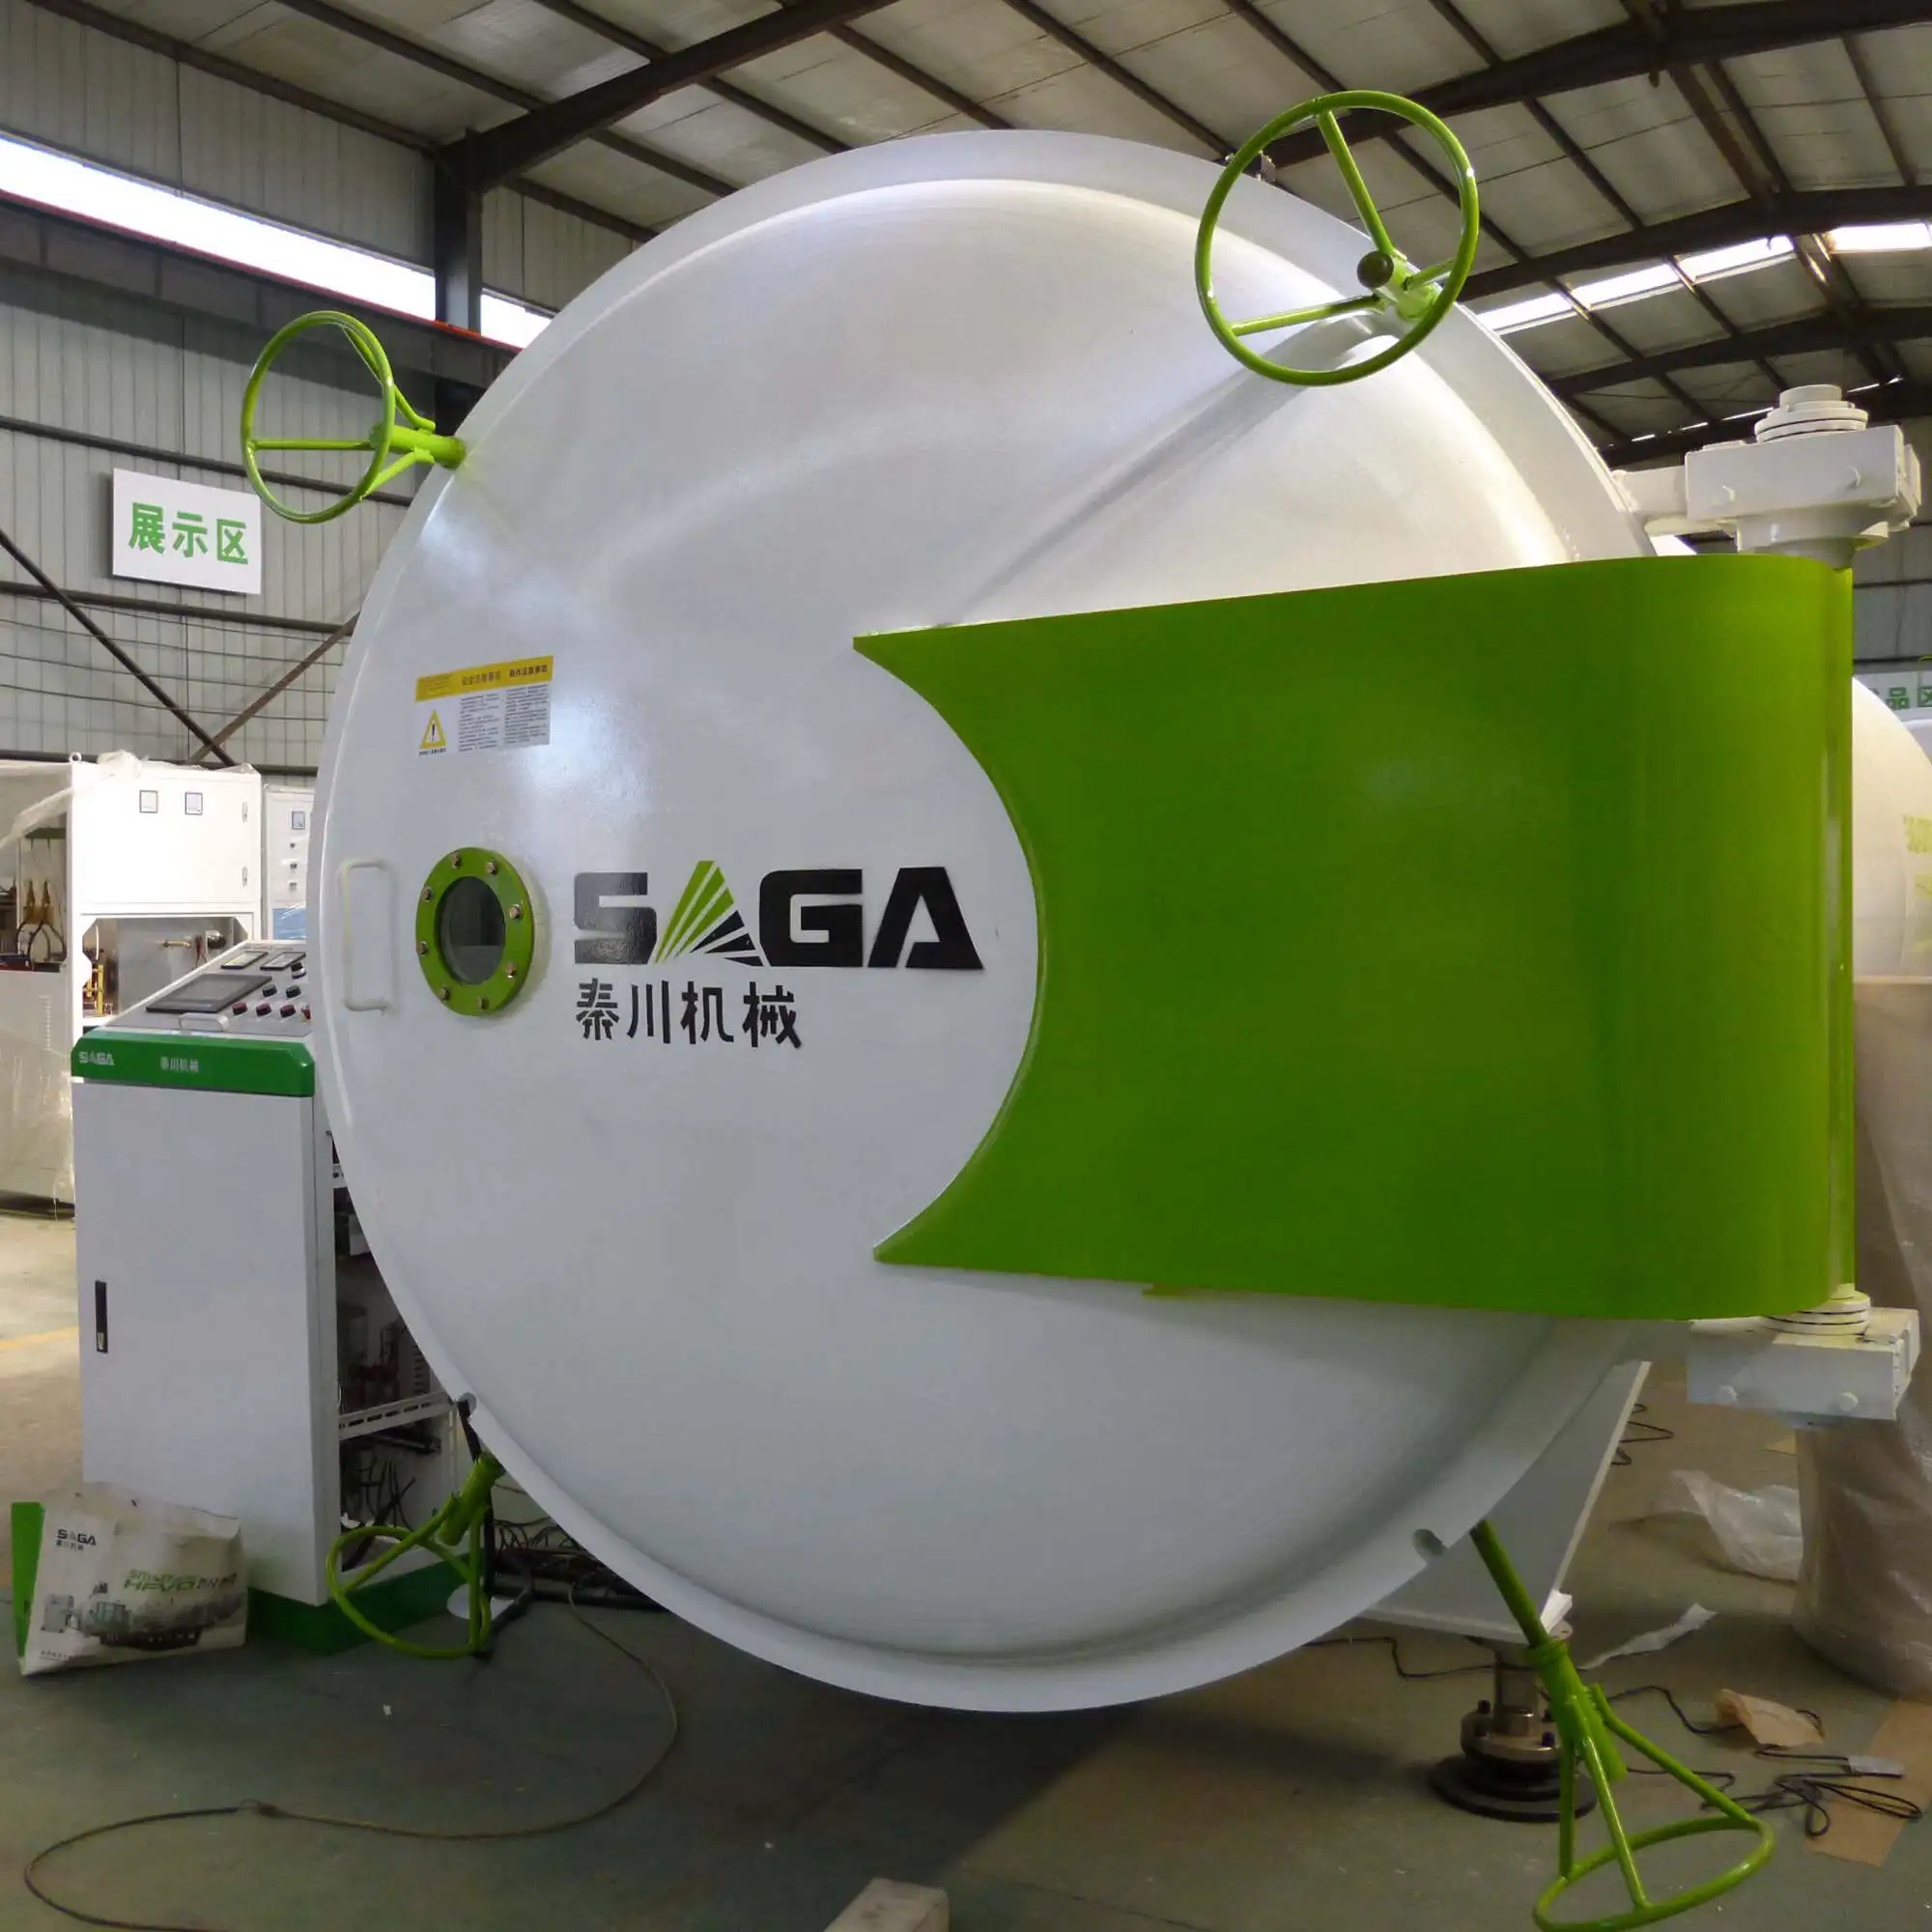 High Frequency Vacuum Solid Wood Drying Tube Machine SAGA 4.5m3